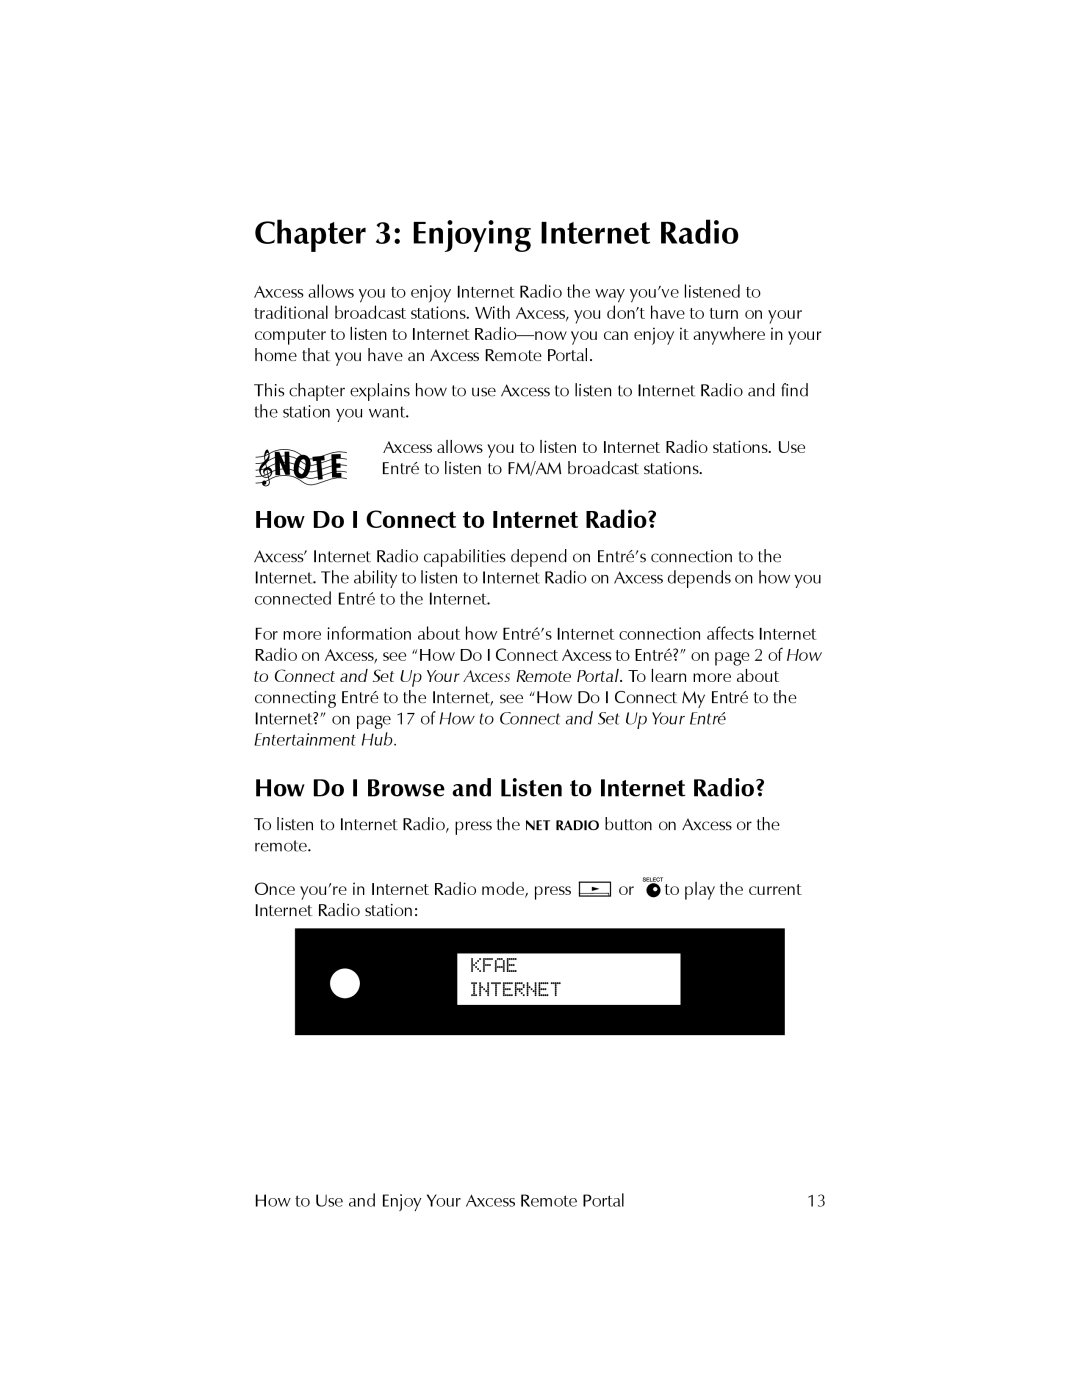 Kenwood REMOTE PORTAL AXCESS manual Enjoying Internet Radio, How Do I Connect to Internet Radio?, Kfae Internet 